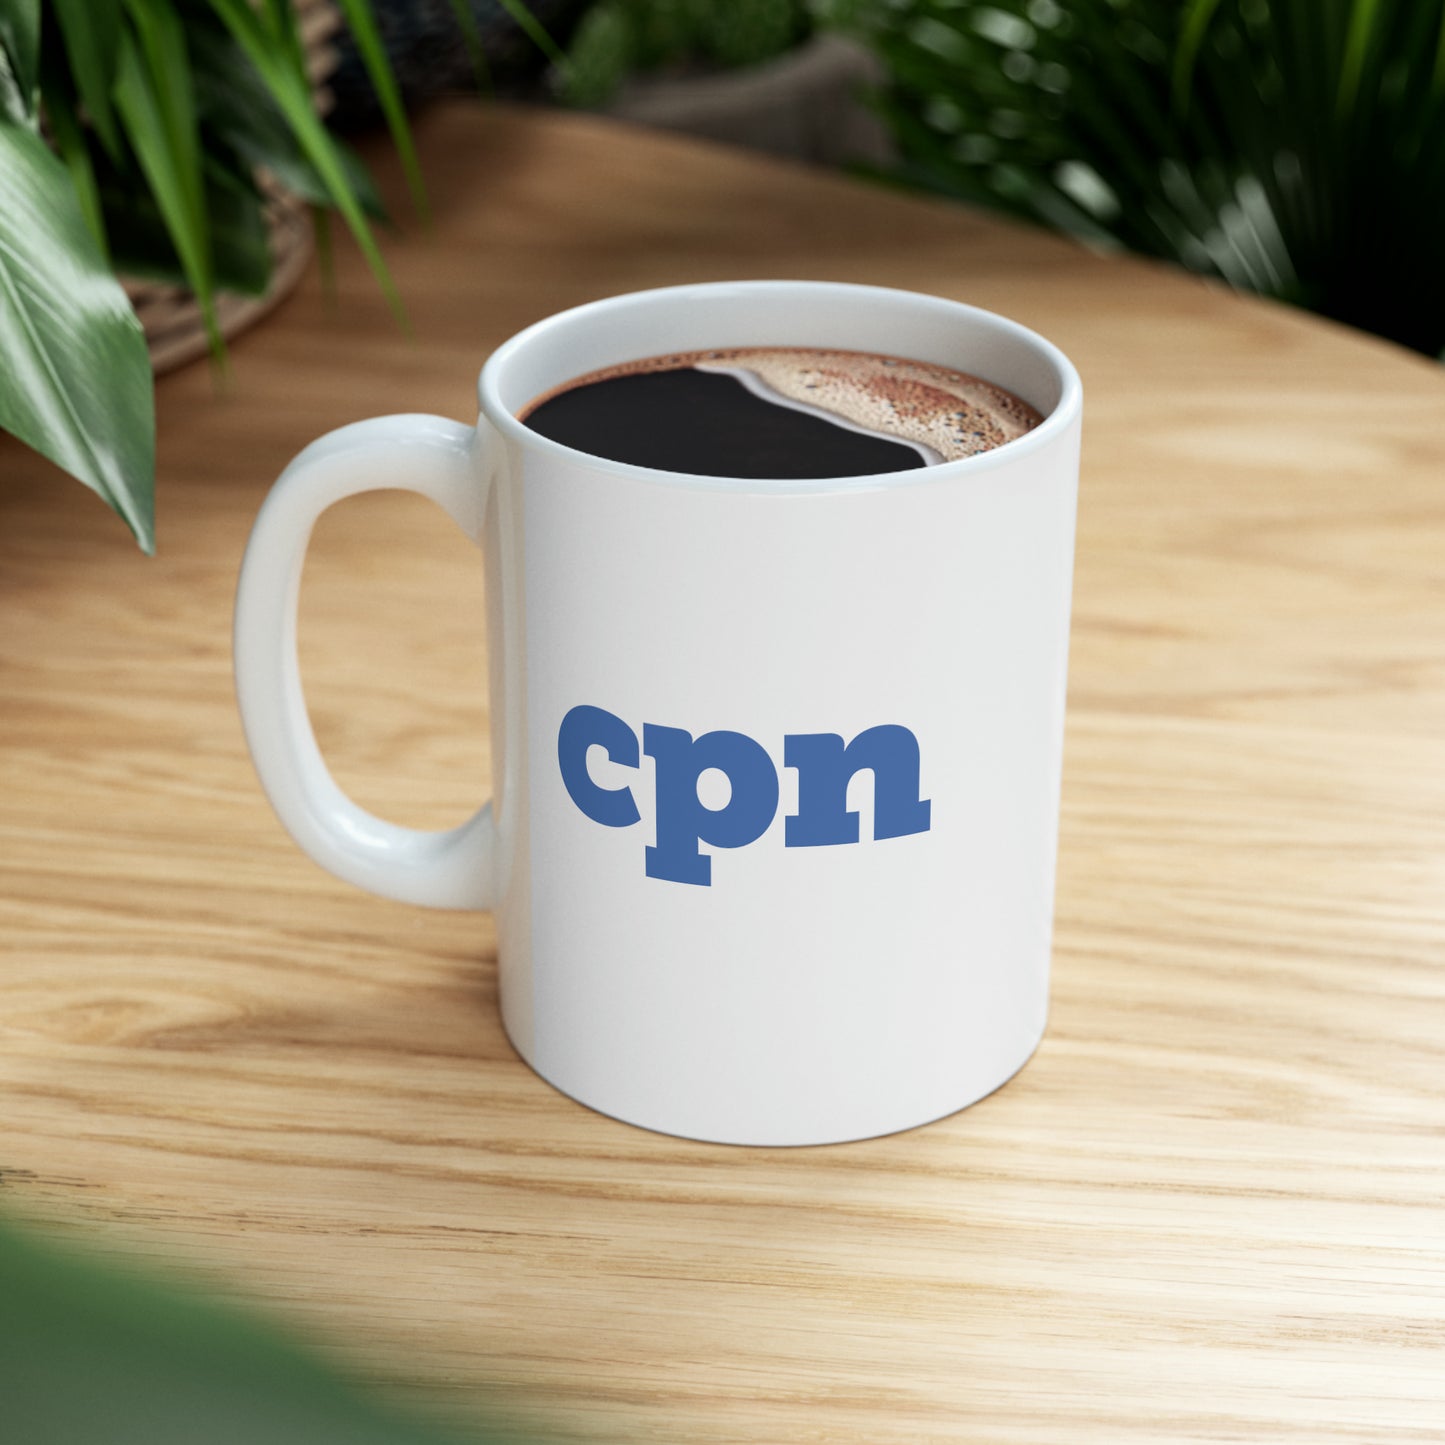 CPN Logo Ceramic Mug, 11oz